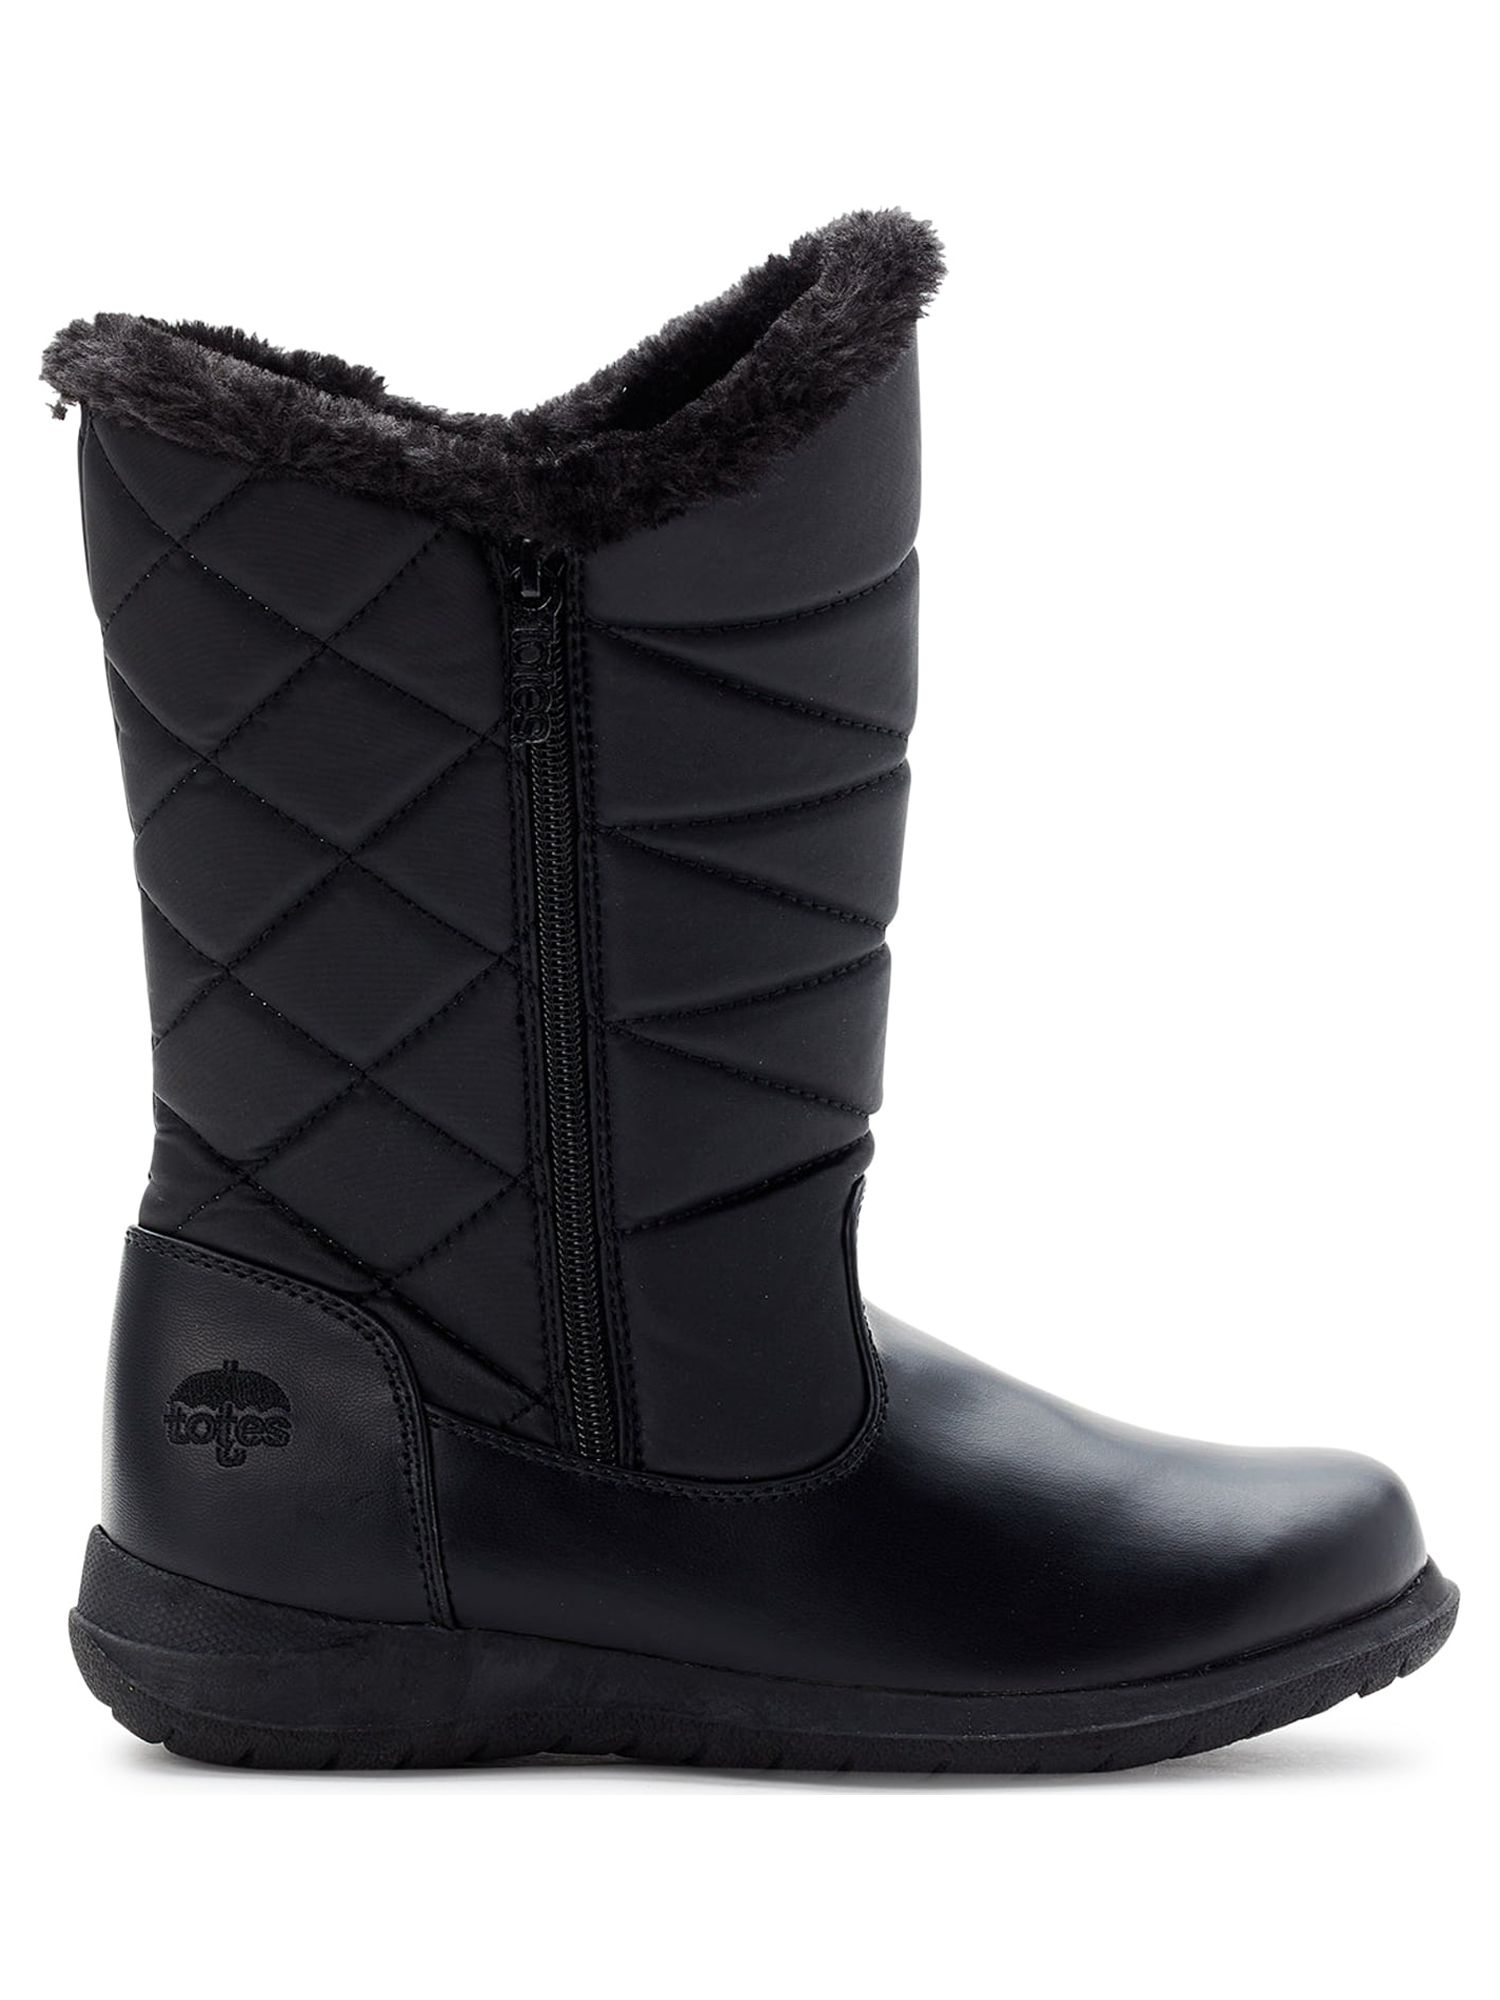 Totes Women's Edgen Waterproof Zip Up Snow Boots, Sizes 6-11, Wide Width Available - image 5 of 5